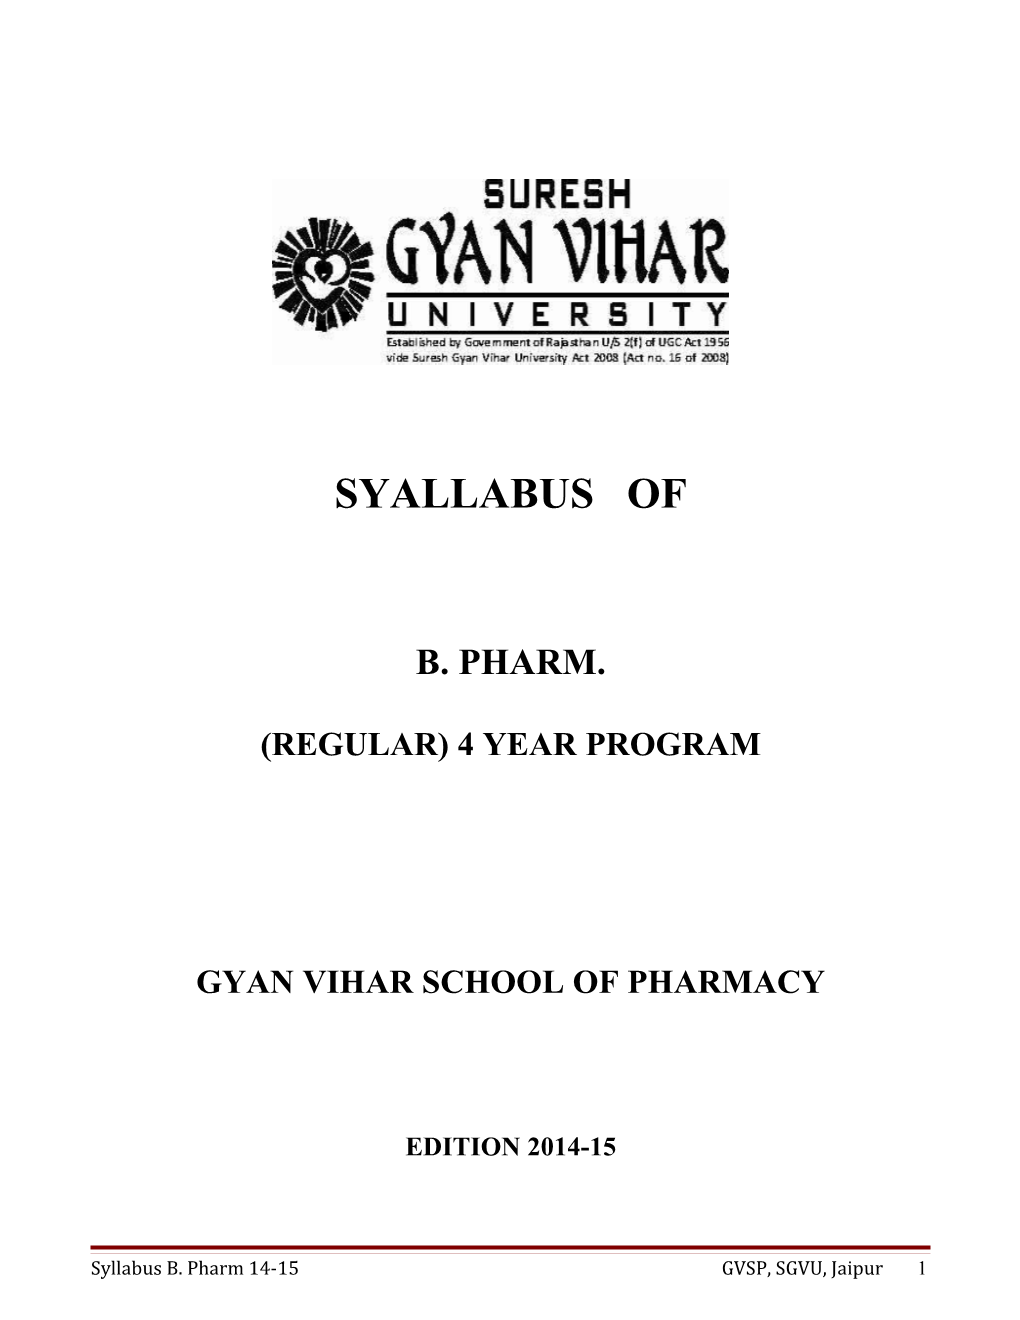 Gyan Vihar School of Pharmacy